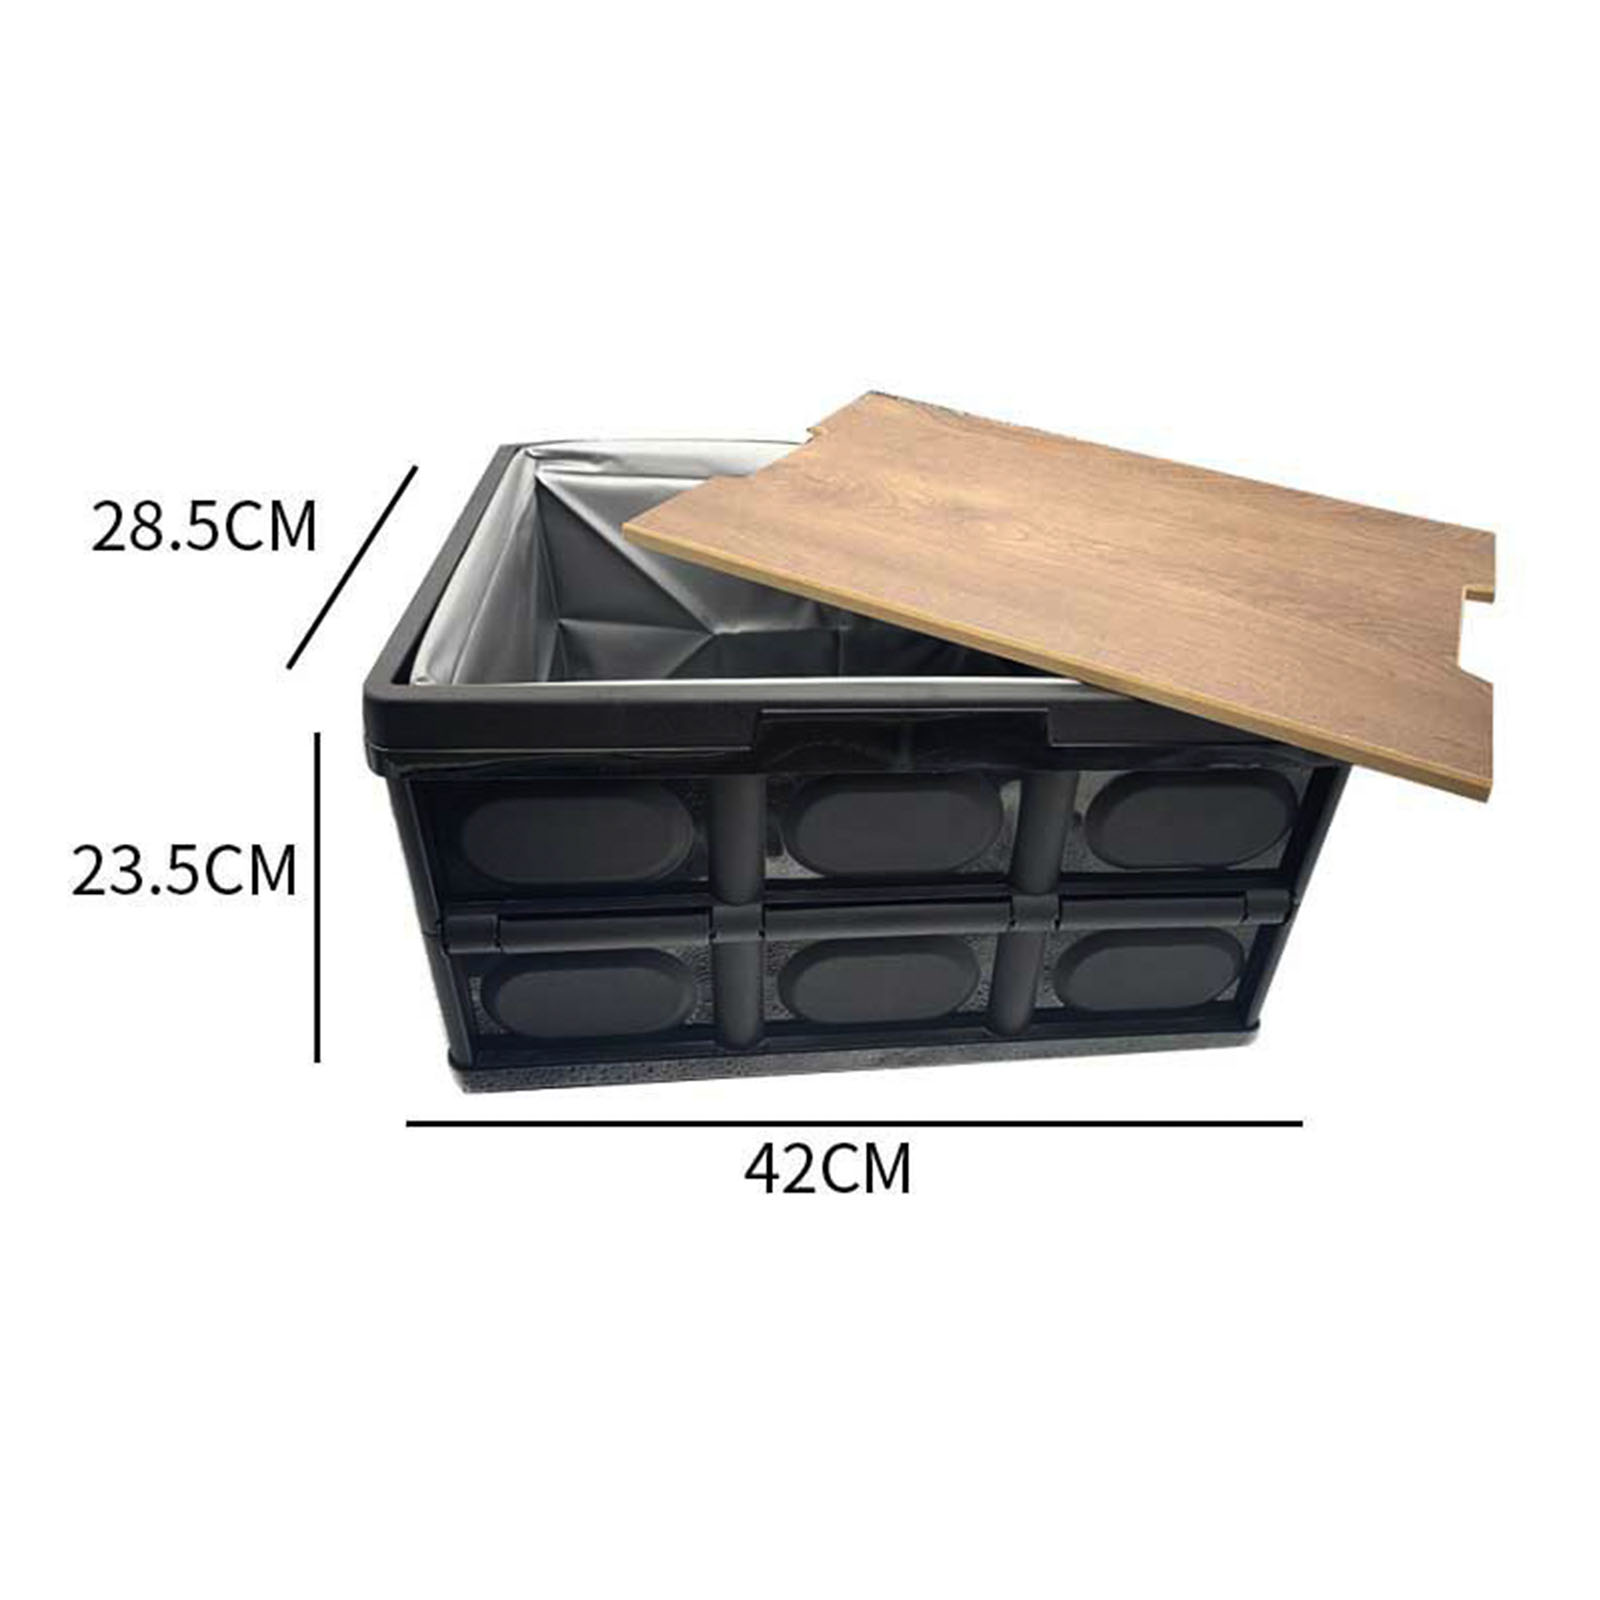 Outdoor camping storage box Foldable protable camping box Car trunk storage box